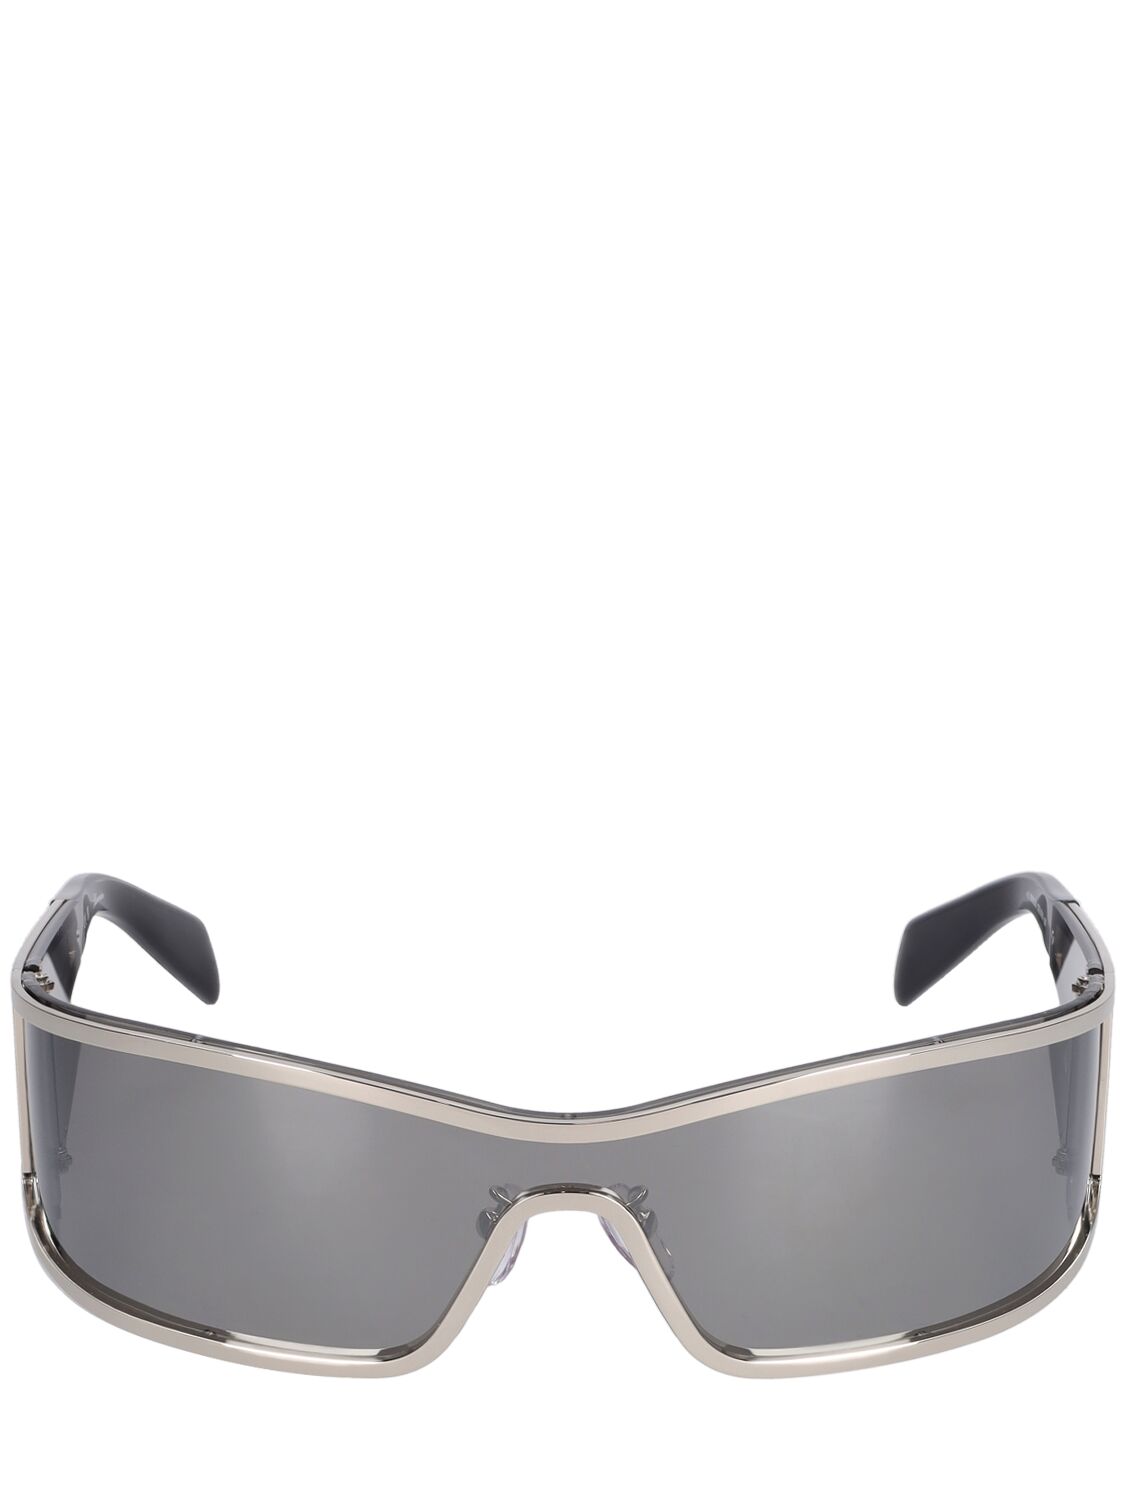 Blumarine Slim Mask Acetate Sunglasses